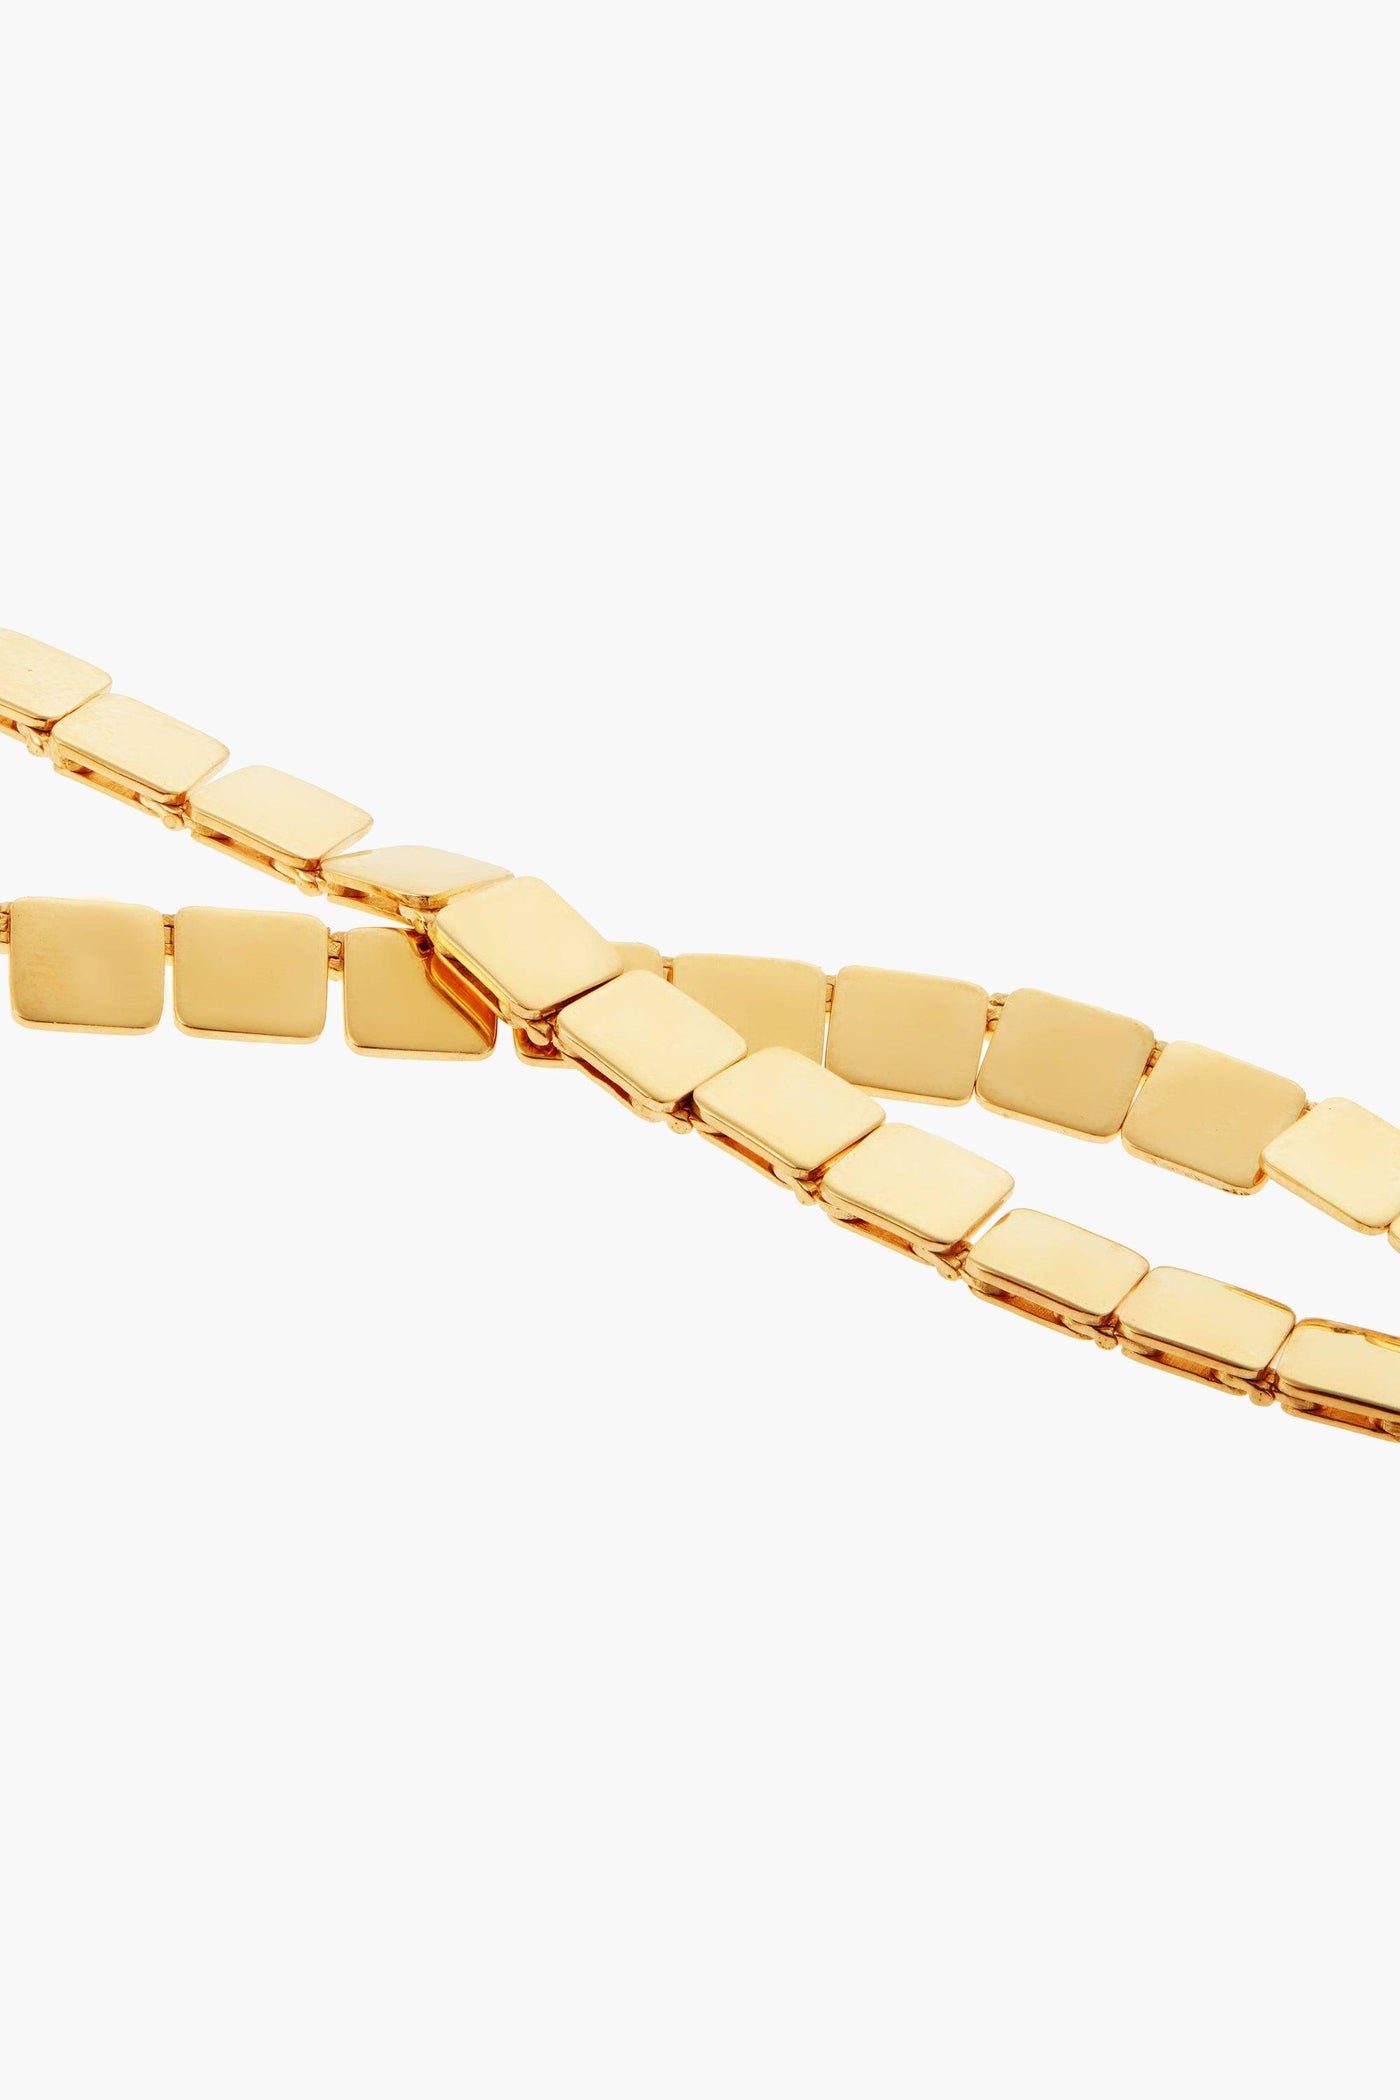 Ileana-Makri-18K-Yellow-Gold-Medium-Tile-Necklace-Amarees